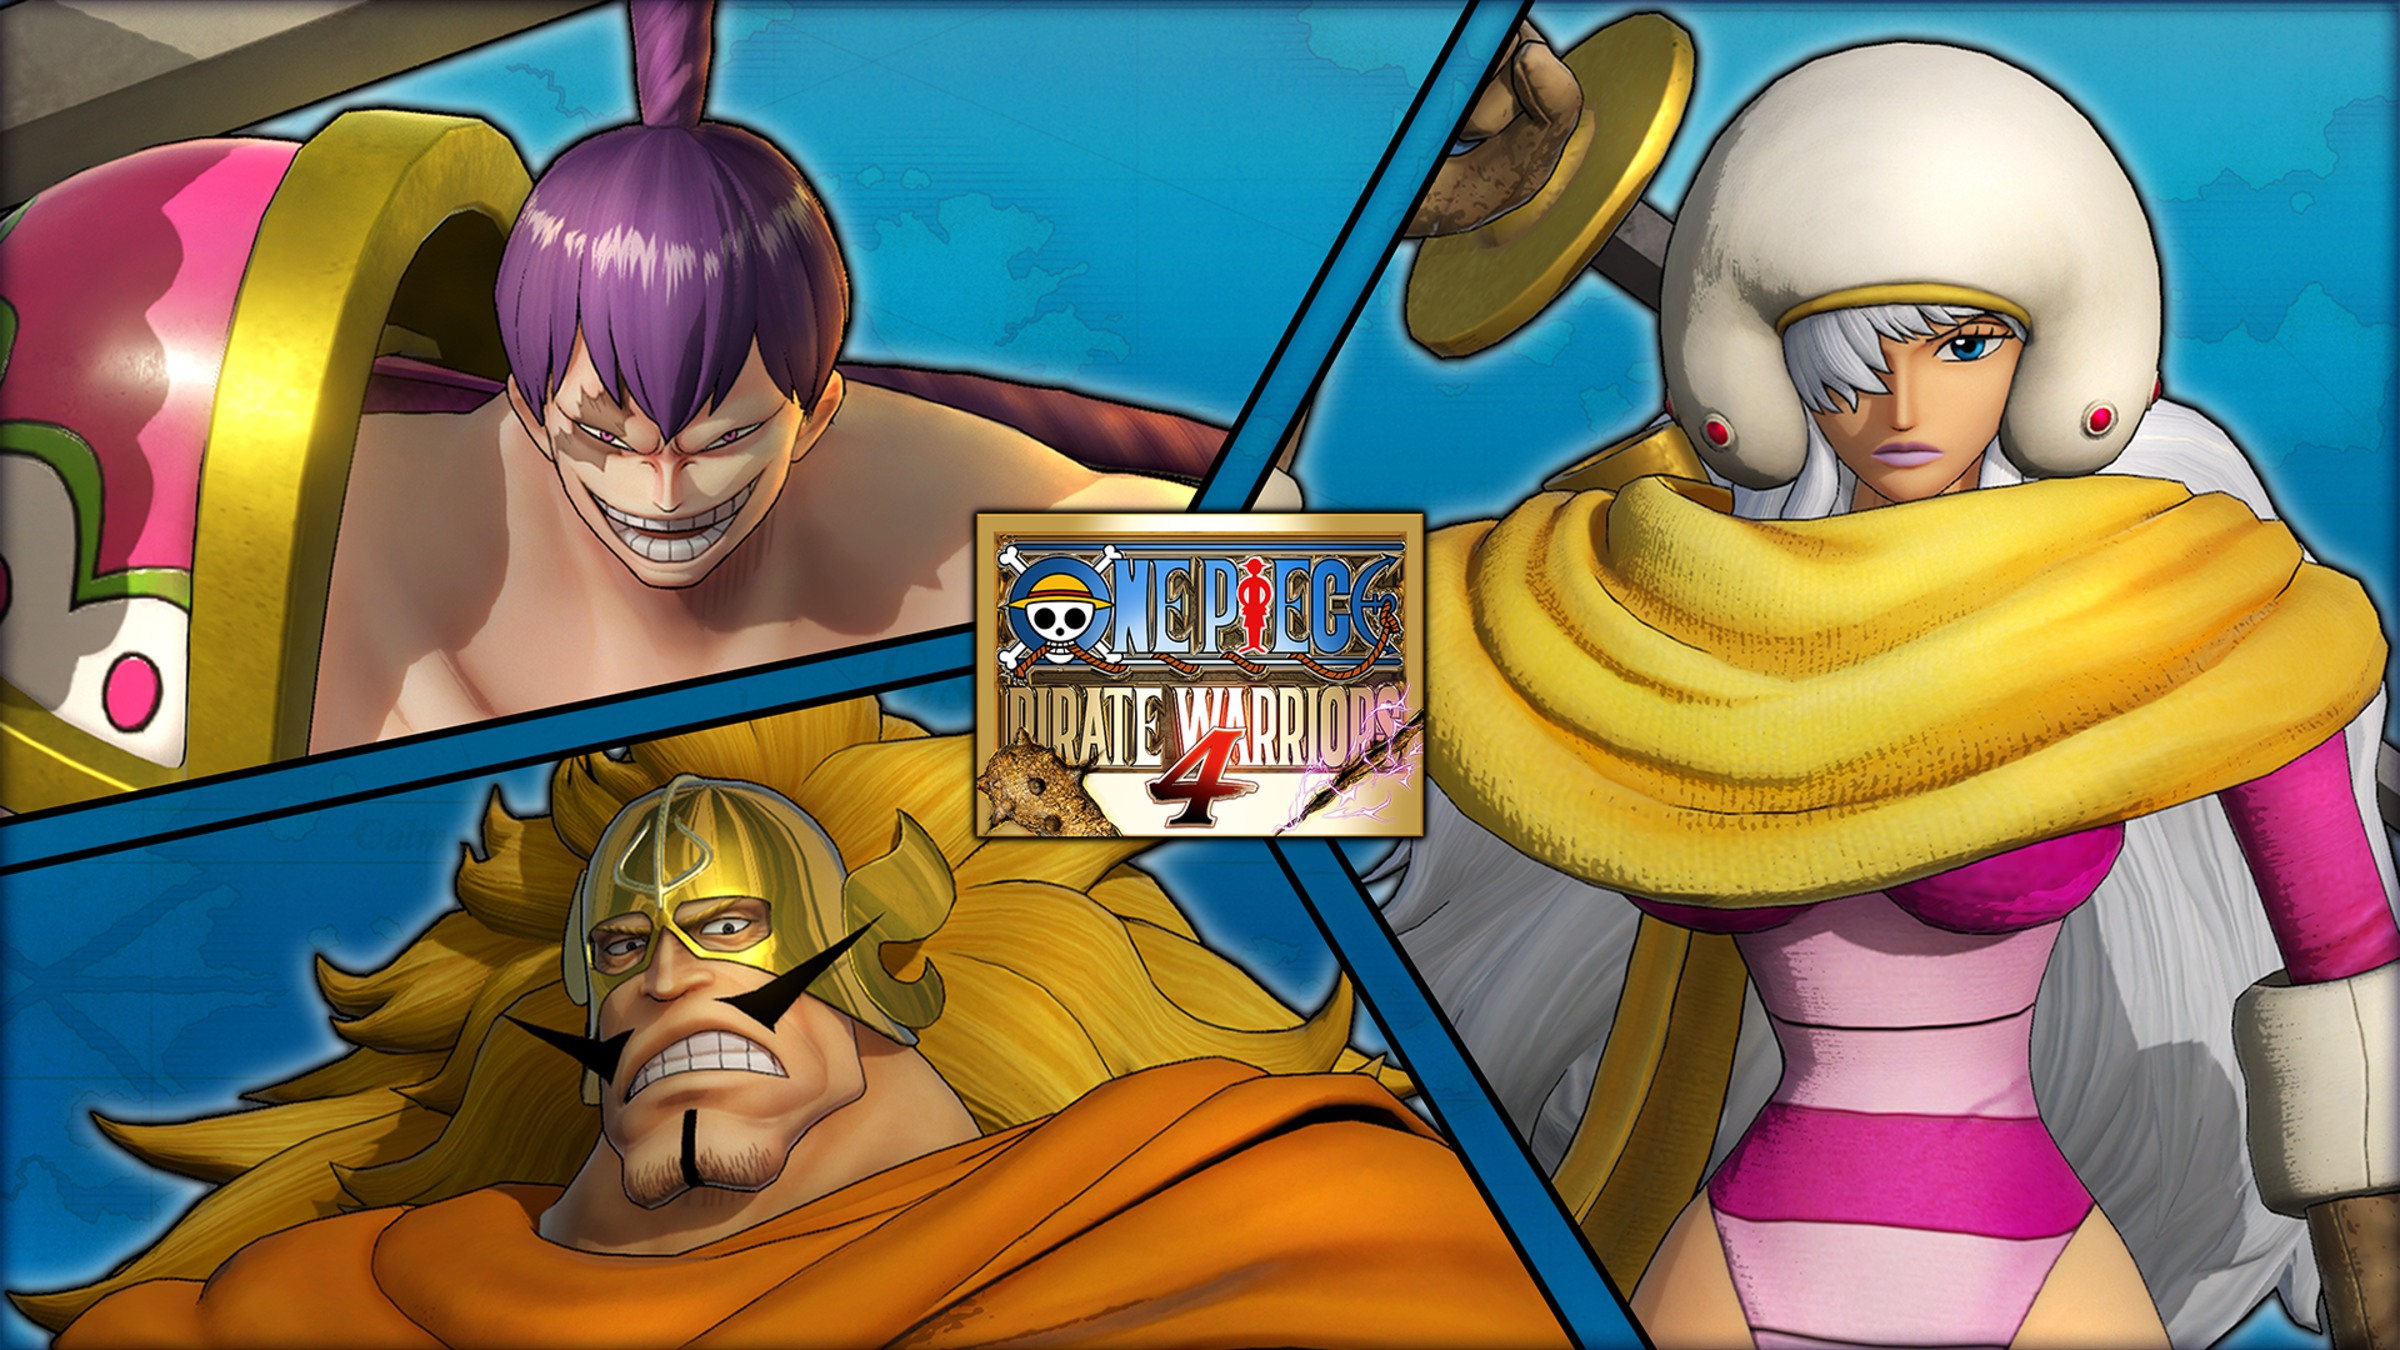 One Piece: Pirate Warriors 4 - Episode 1000 Celebration 